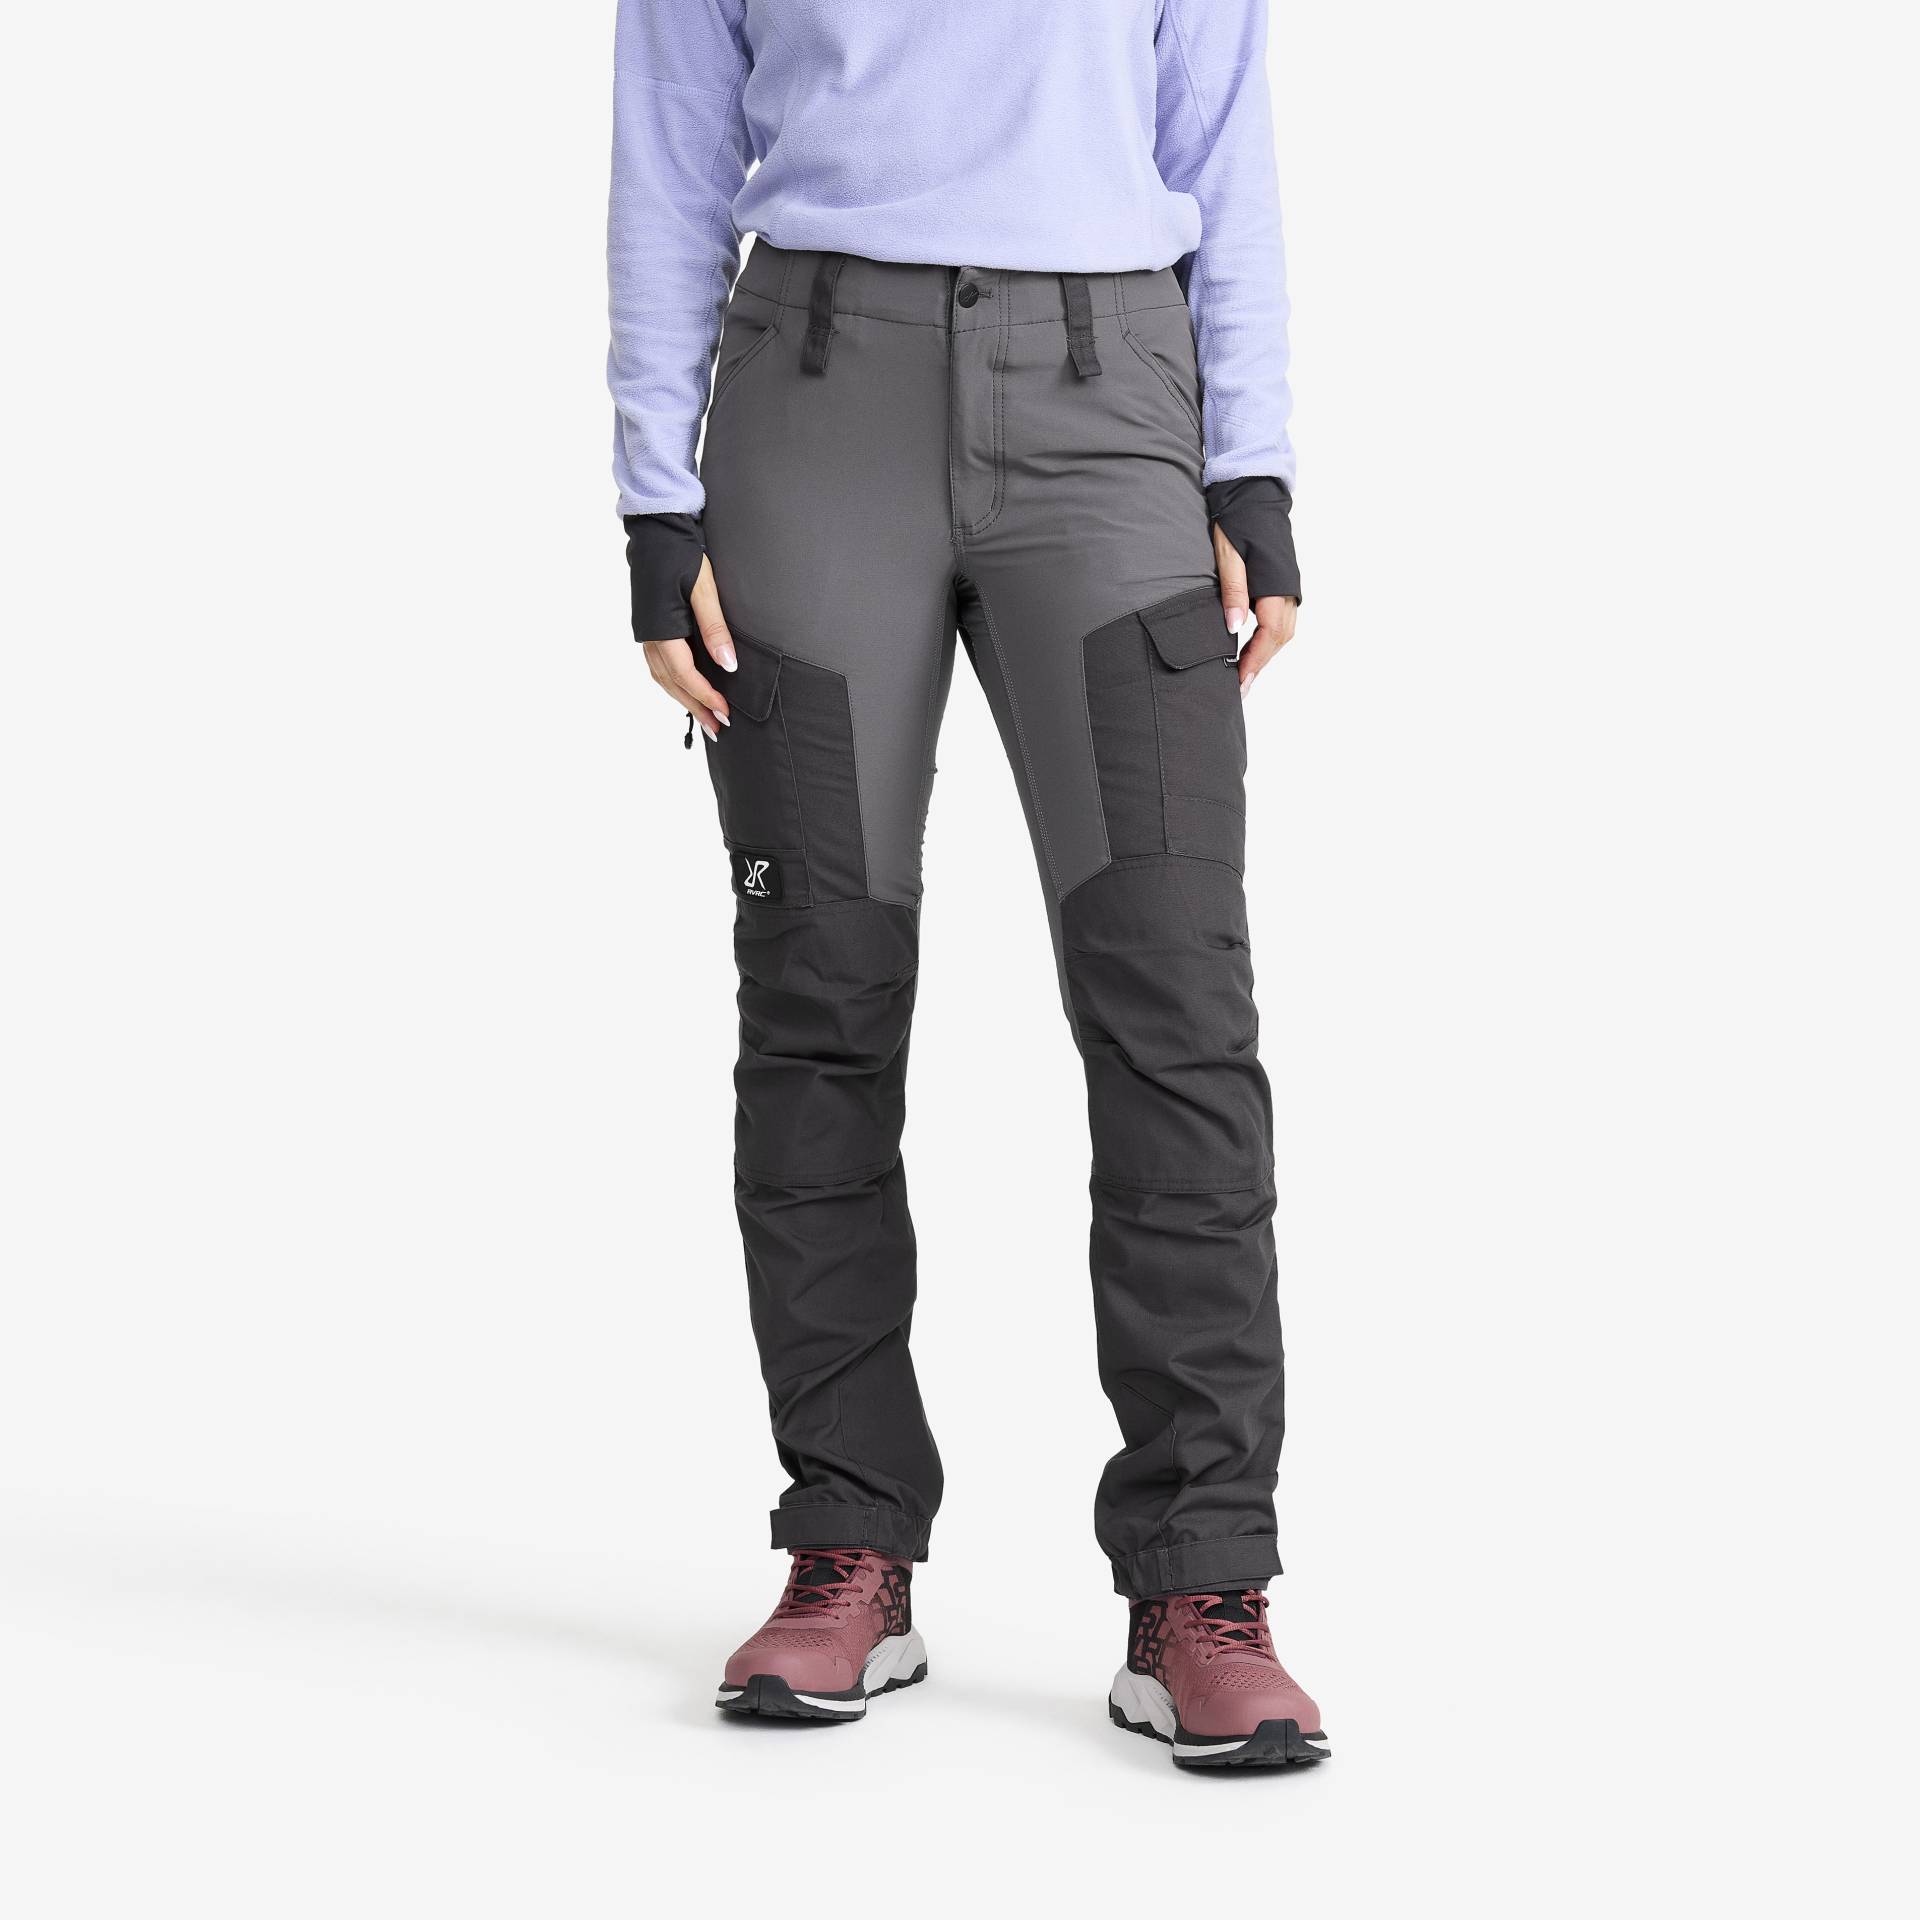 RVRC GP Pants Damen Grey, Größe:XS - Outdoorhose, Wanderhose & Trekkinghose von RevolutionRace